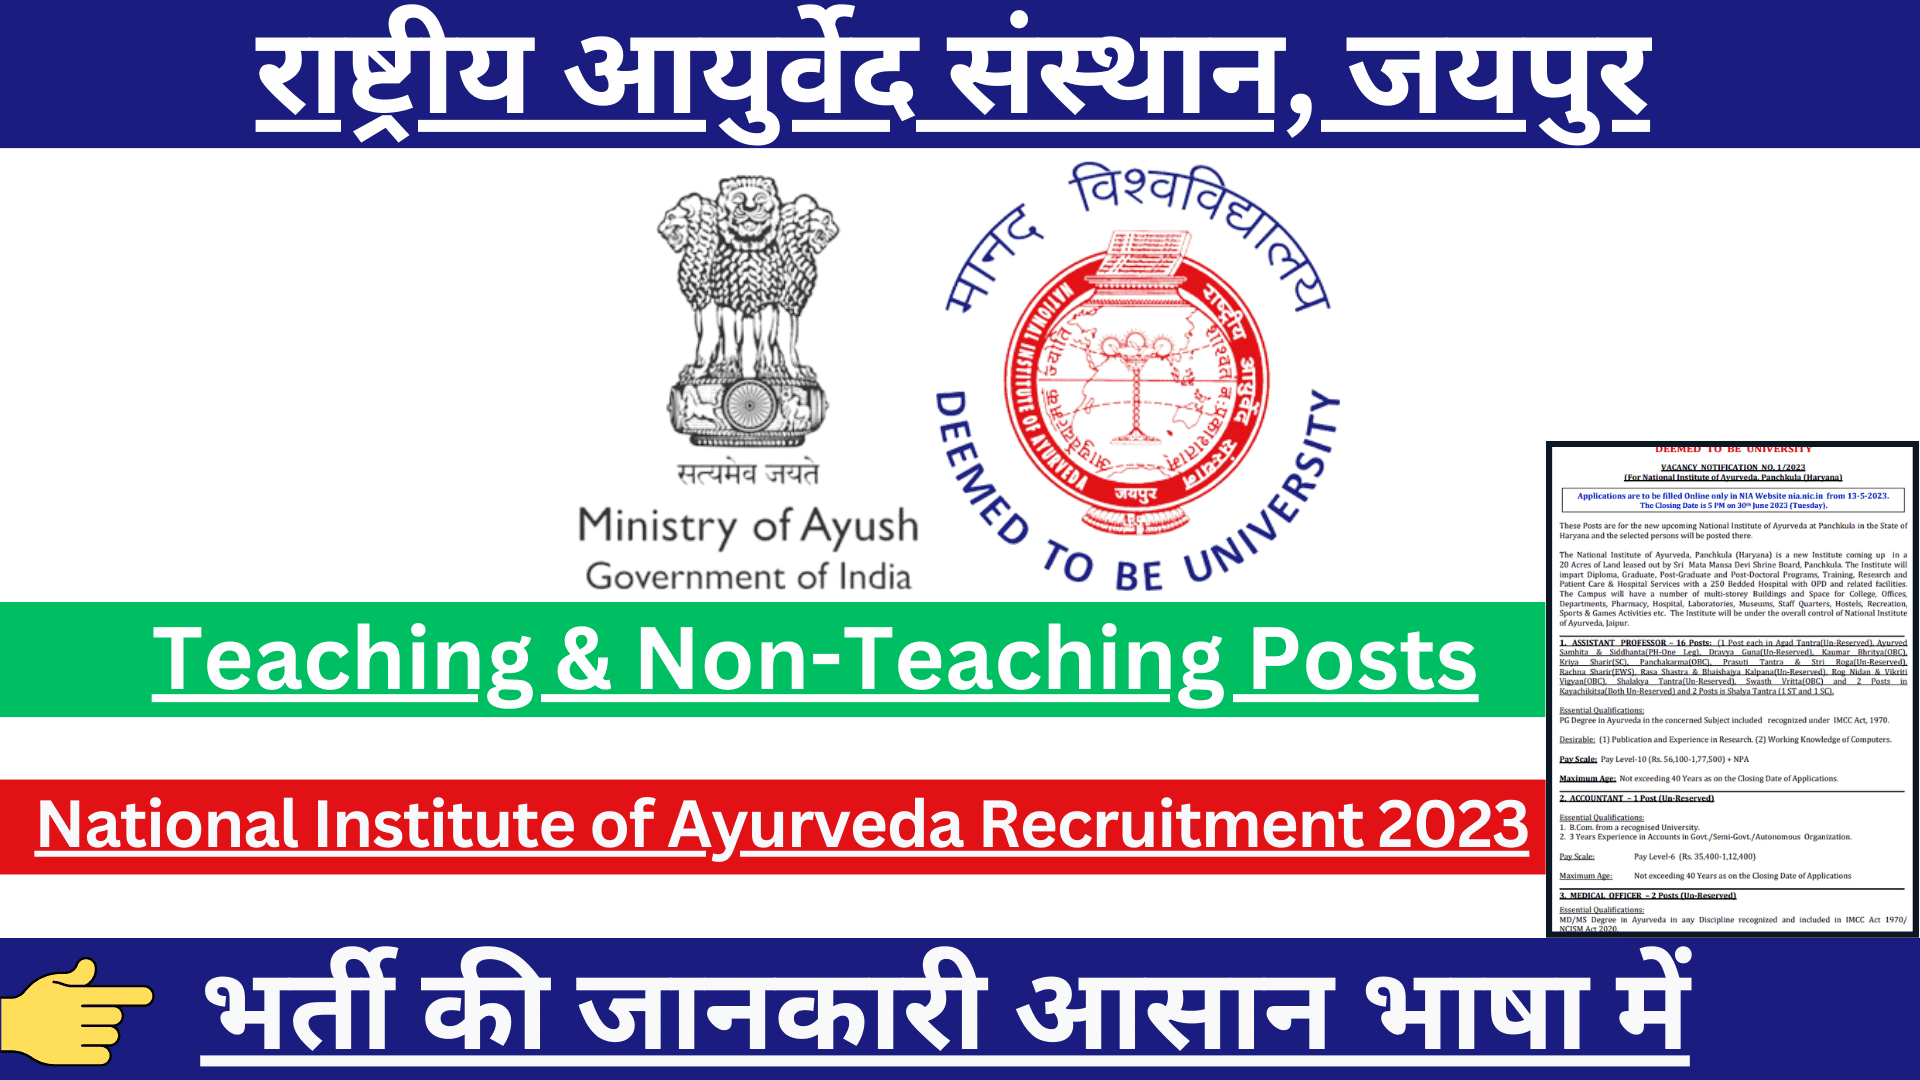 National Institute of Ayurveda Recruitment 2023